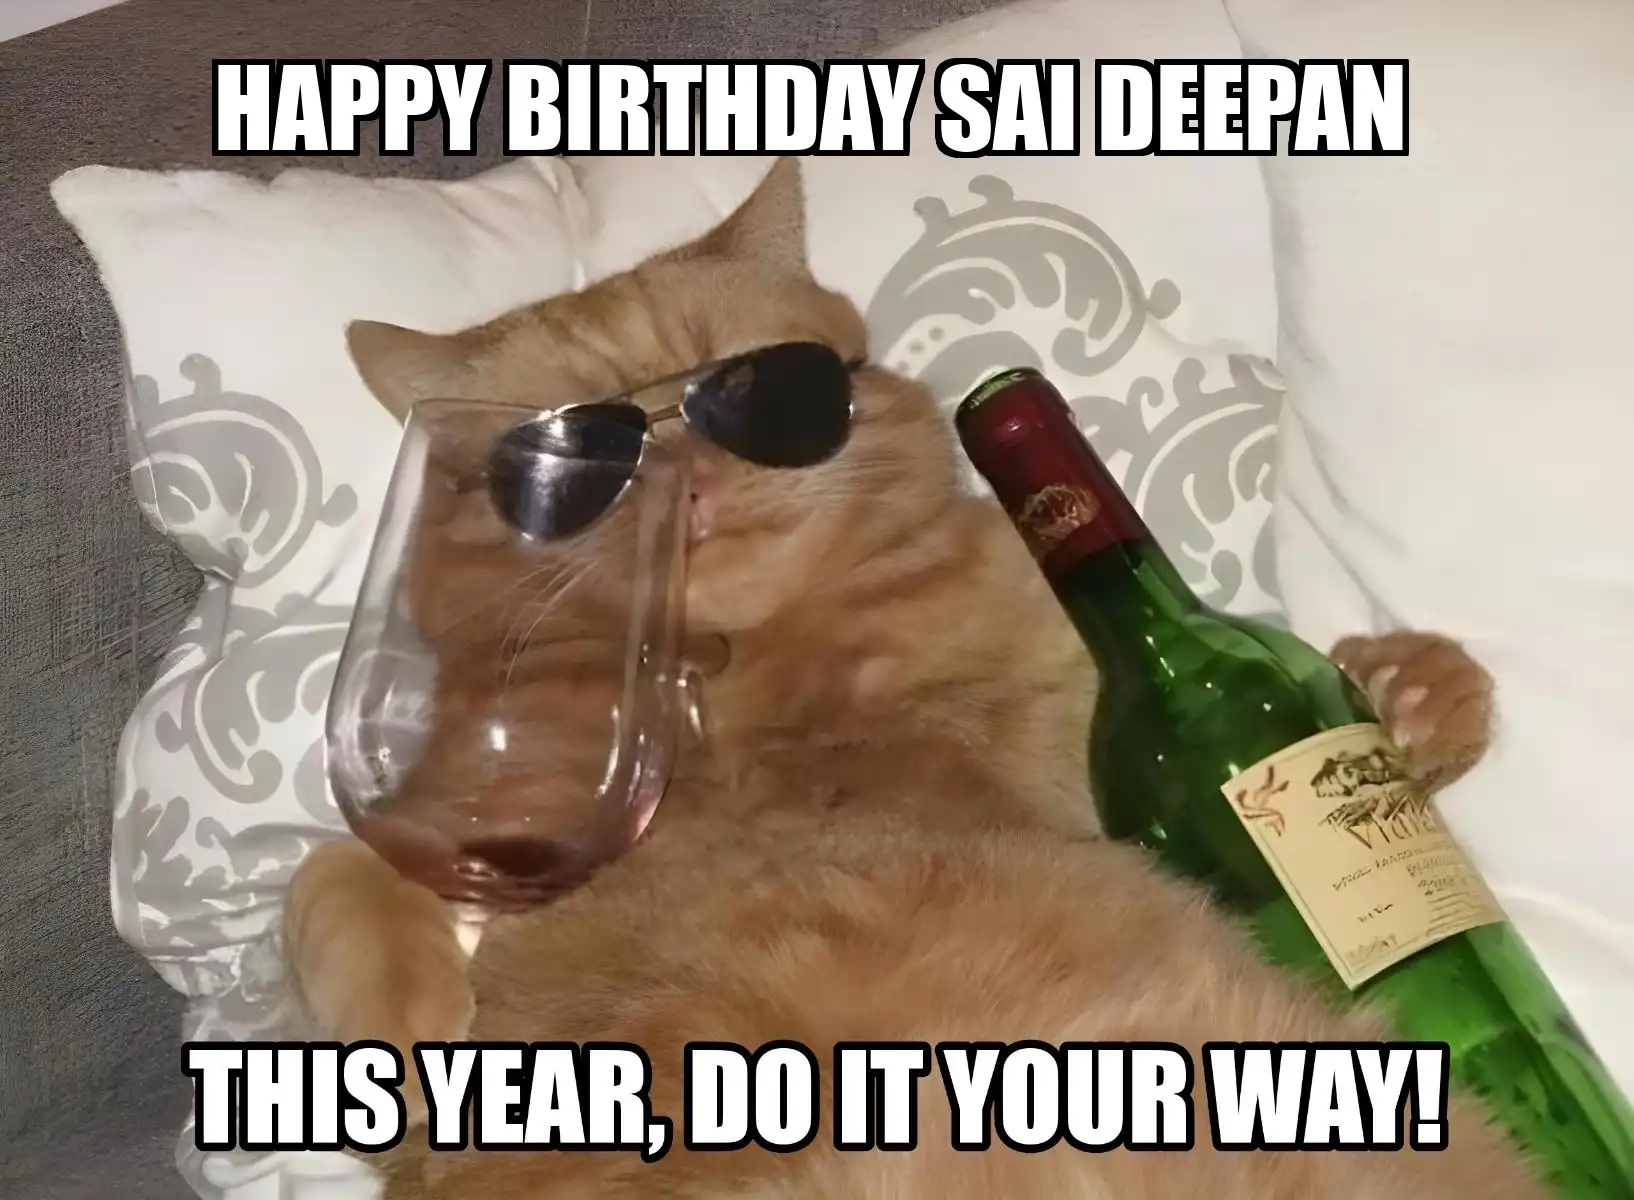 Happy Birthday Sai deepan This Year Do It Your Way Meme